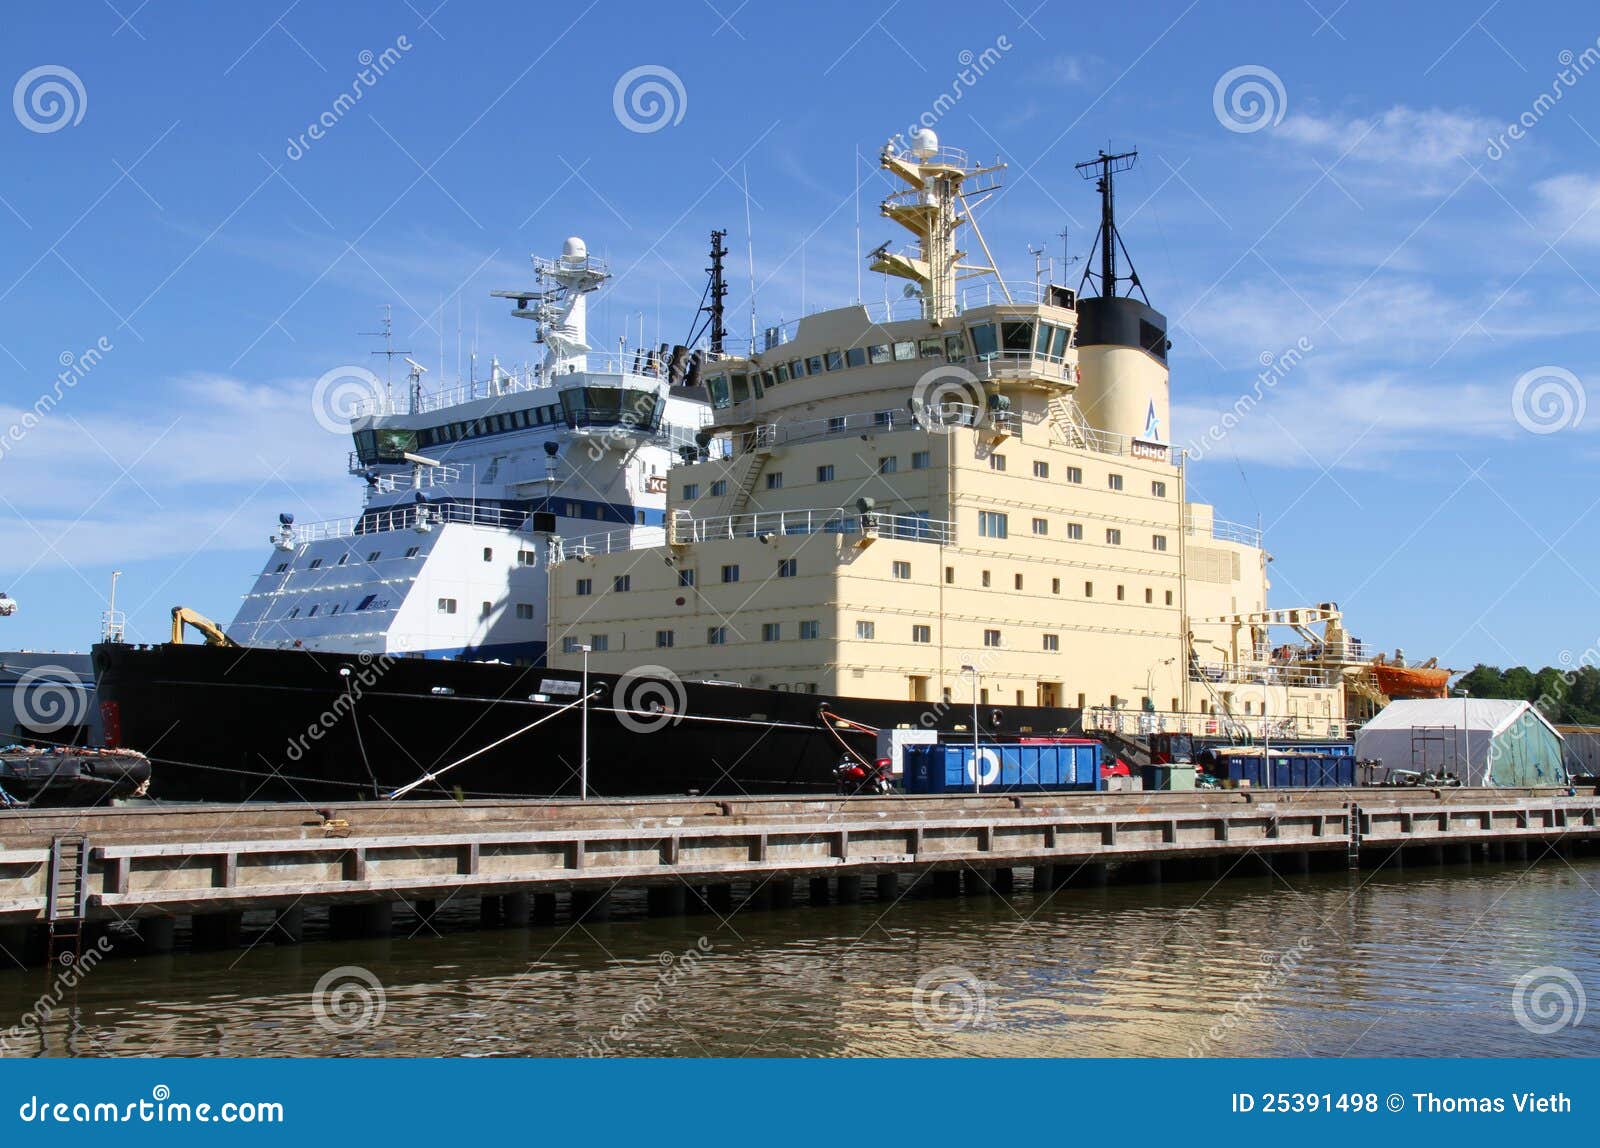  - finnish-icebreakers-summer-vacation-25391498